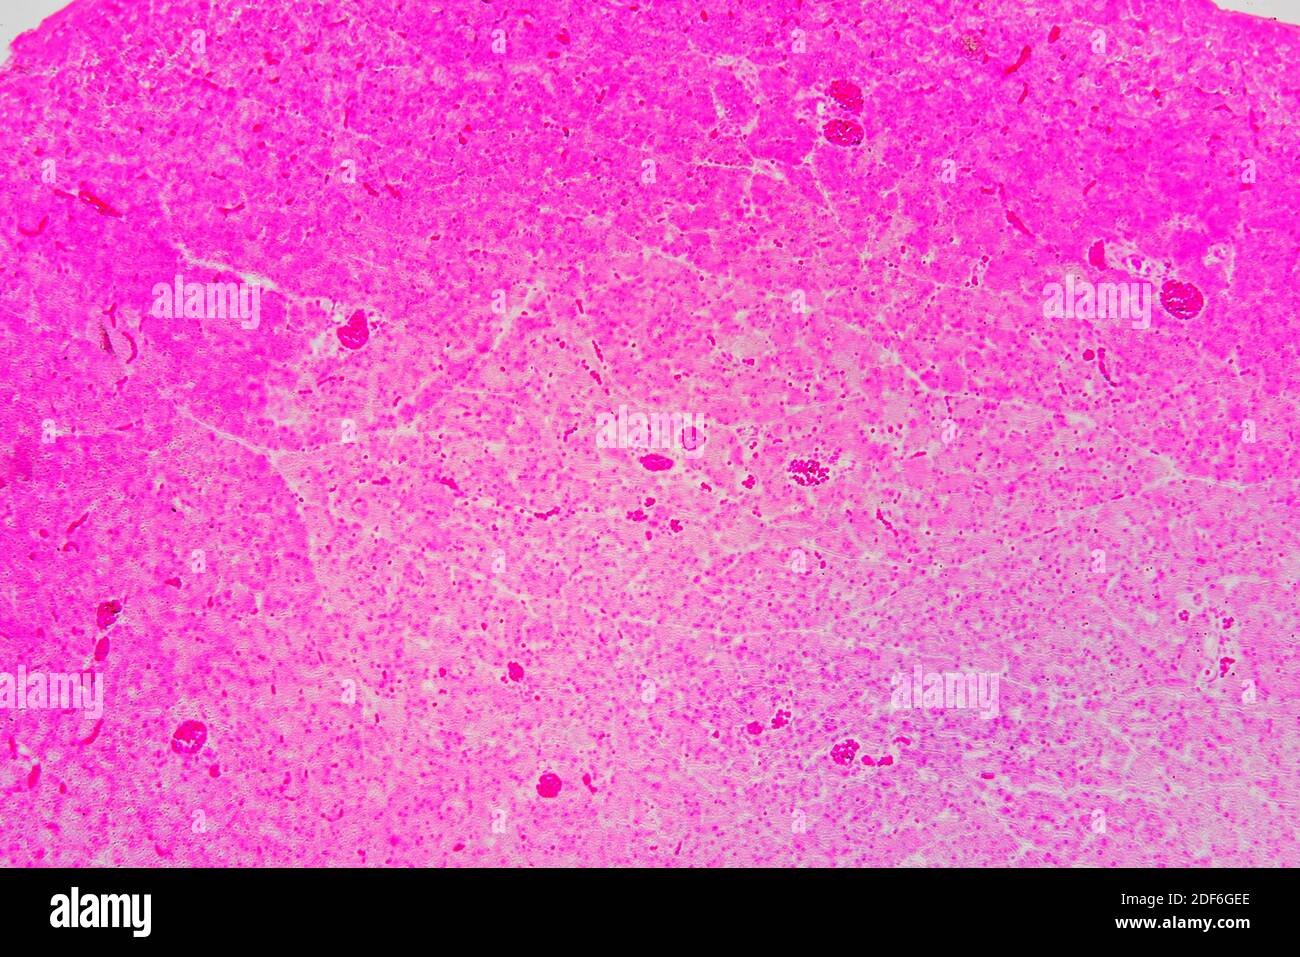 Human pancreas with diabetes Mellitus type 1 showing acin, and islets of Langerhans. Optical microscope X100. Stock Photo